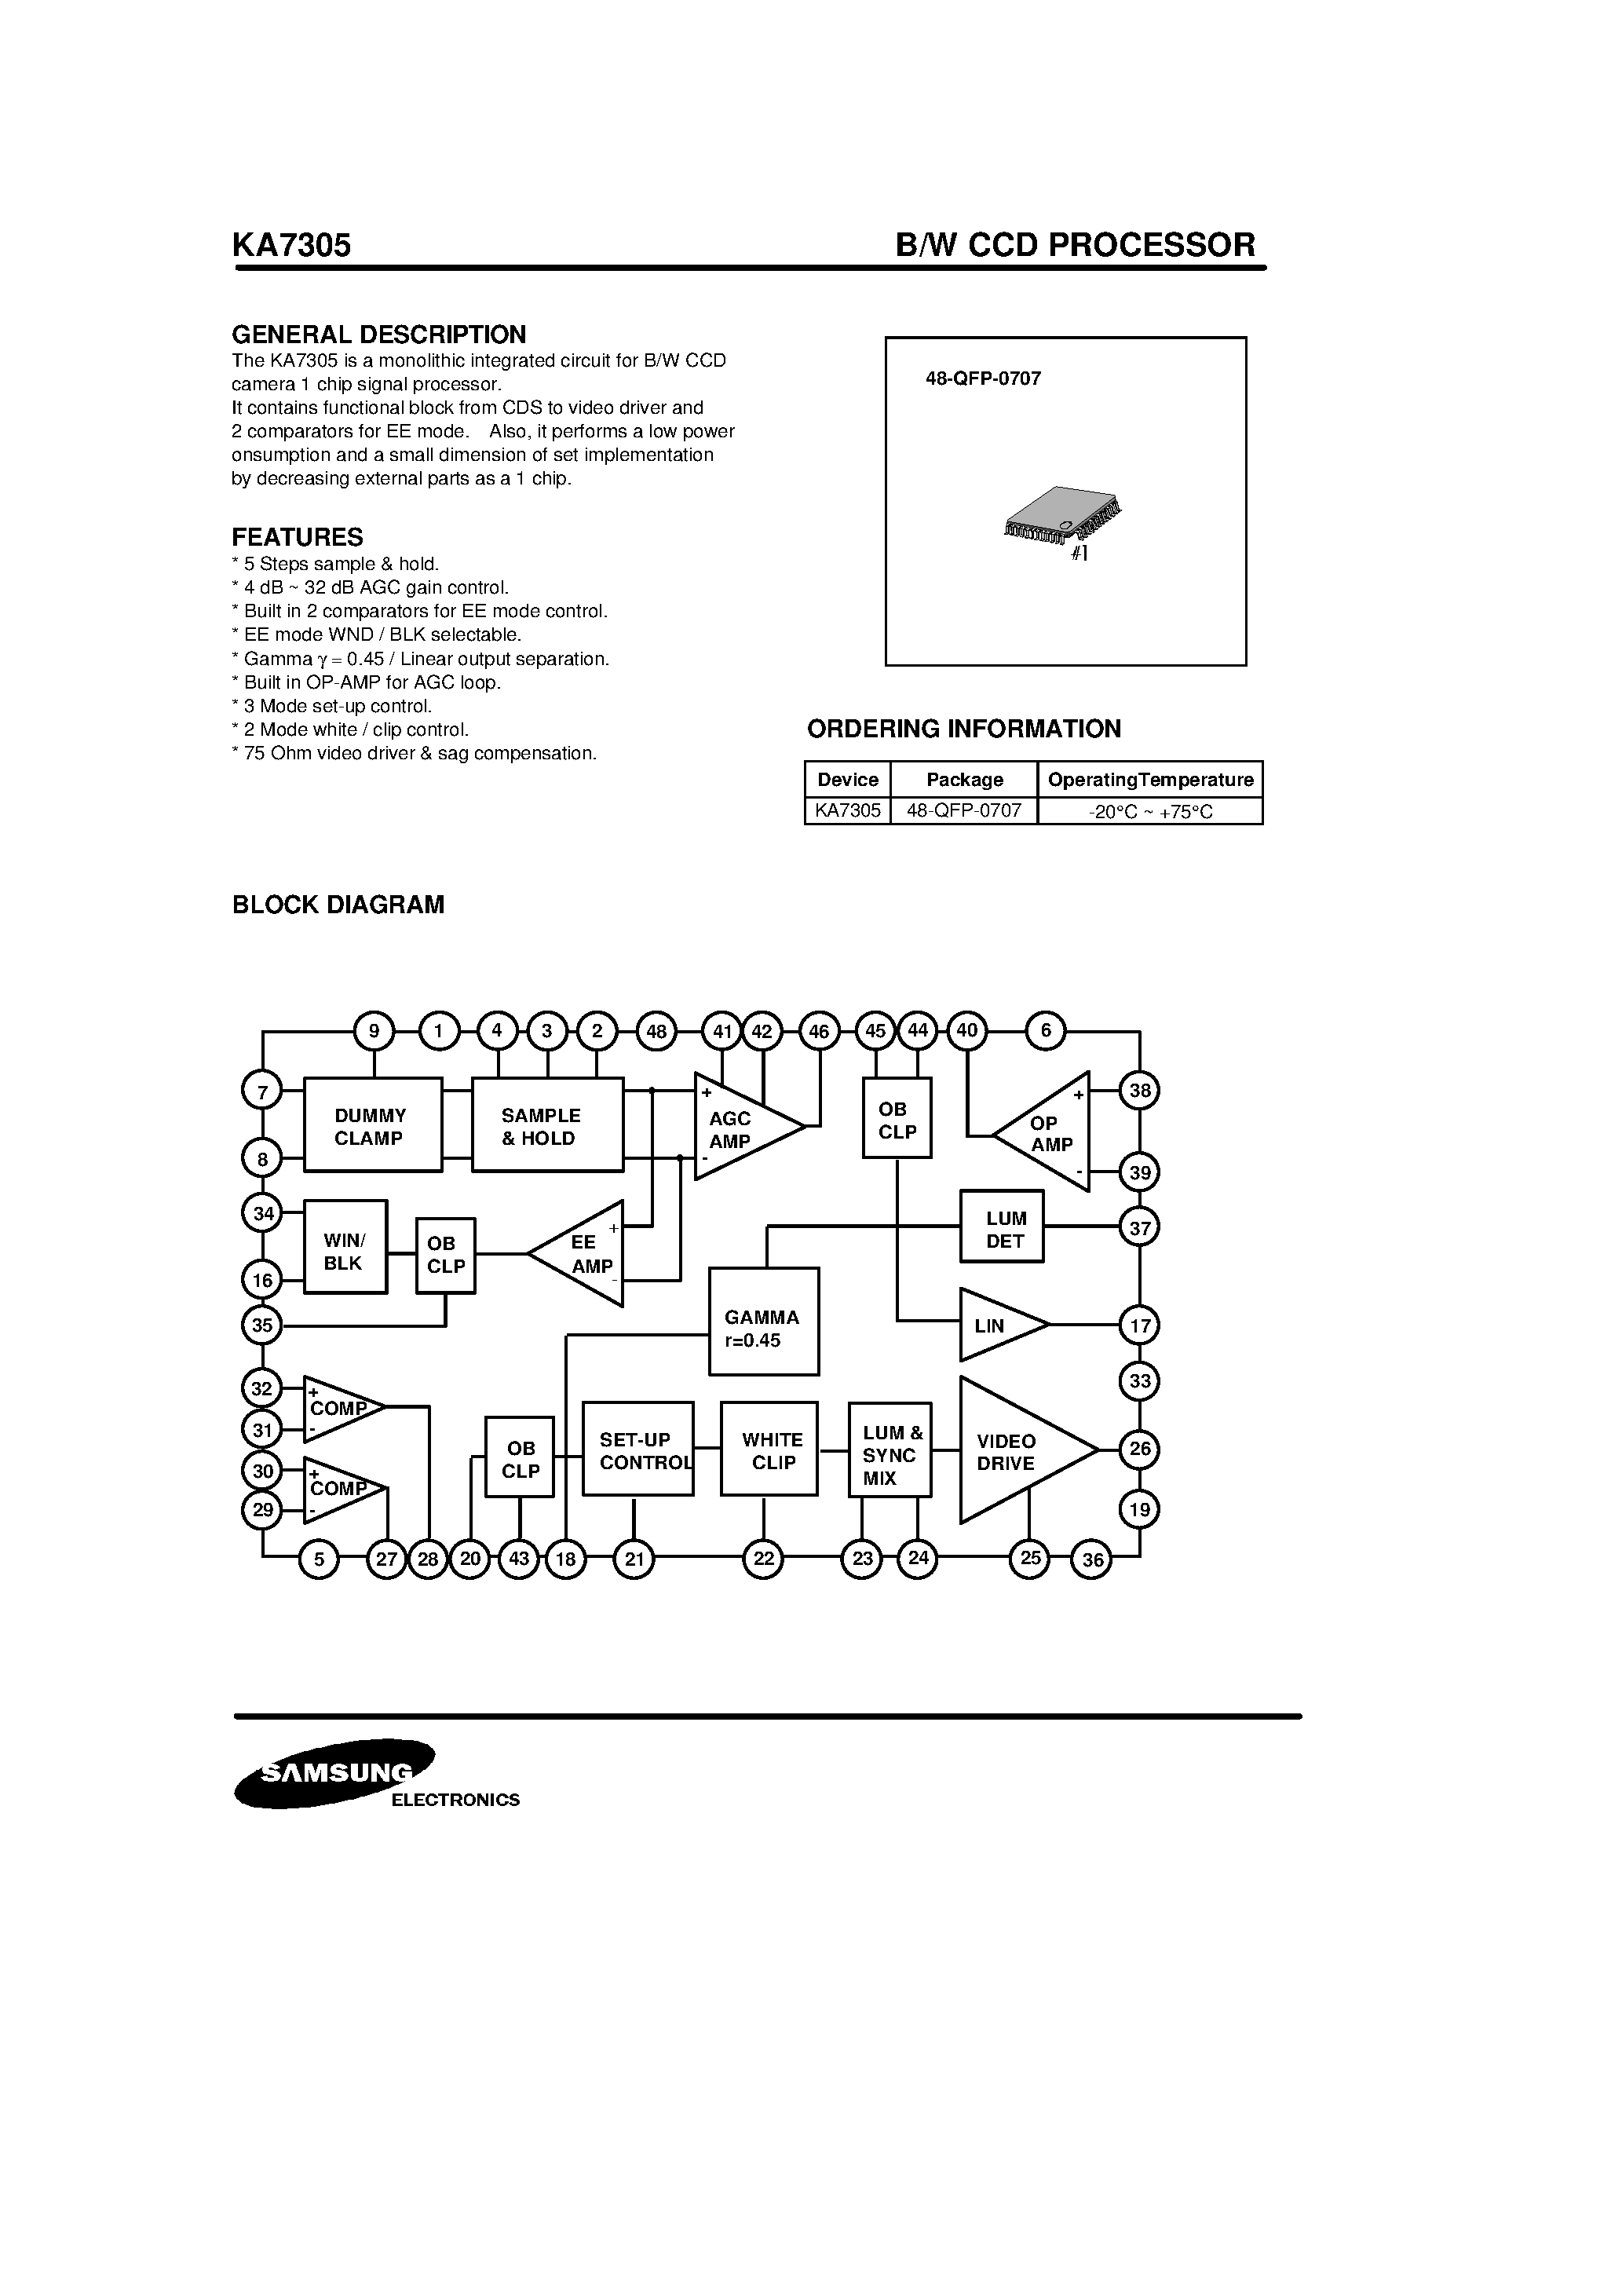 Datasheet KA7305 - B/W CCD PROCESSOR page 1